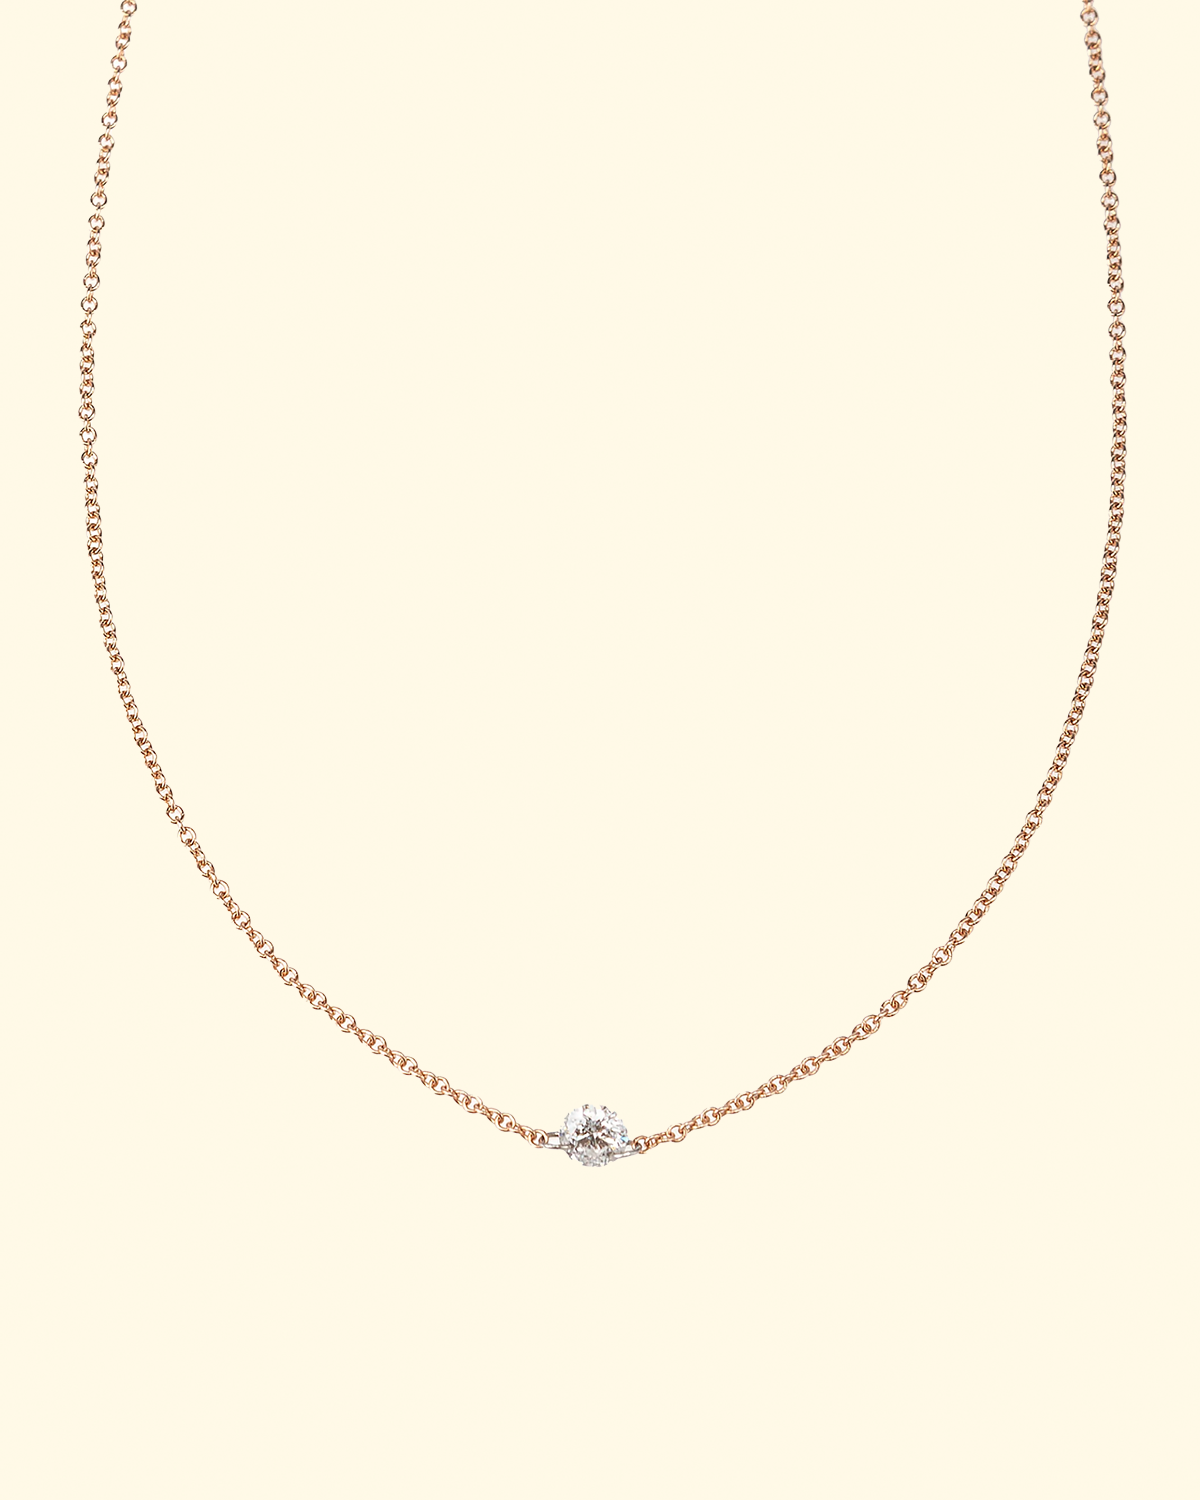 Single floating Diamond Necklace | Yellow Gold